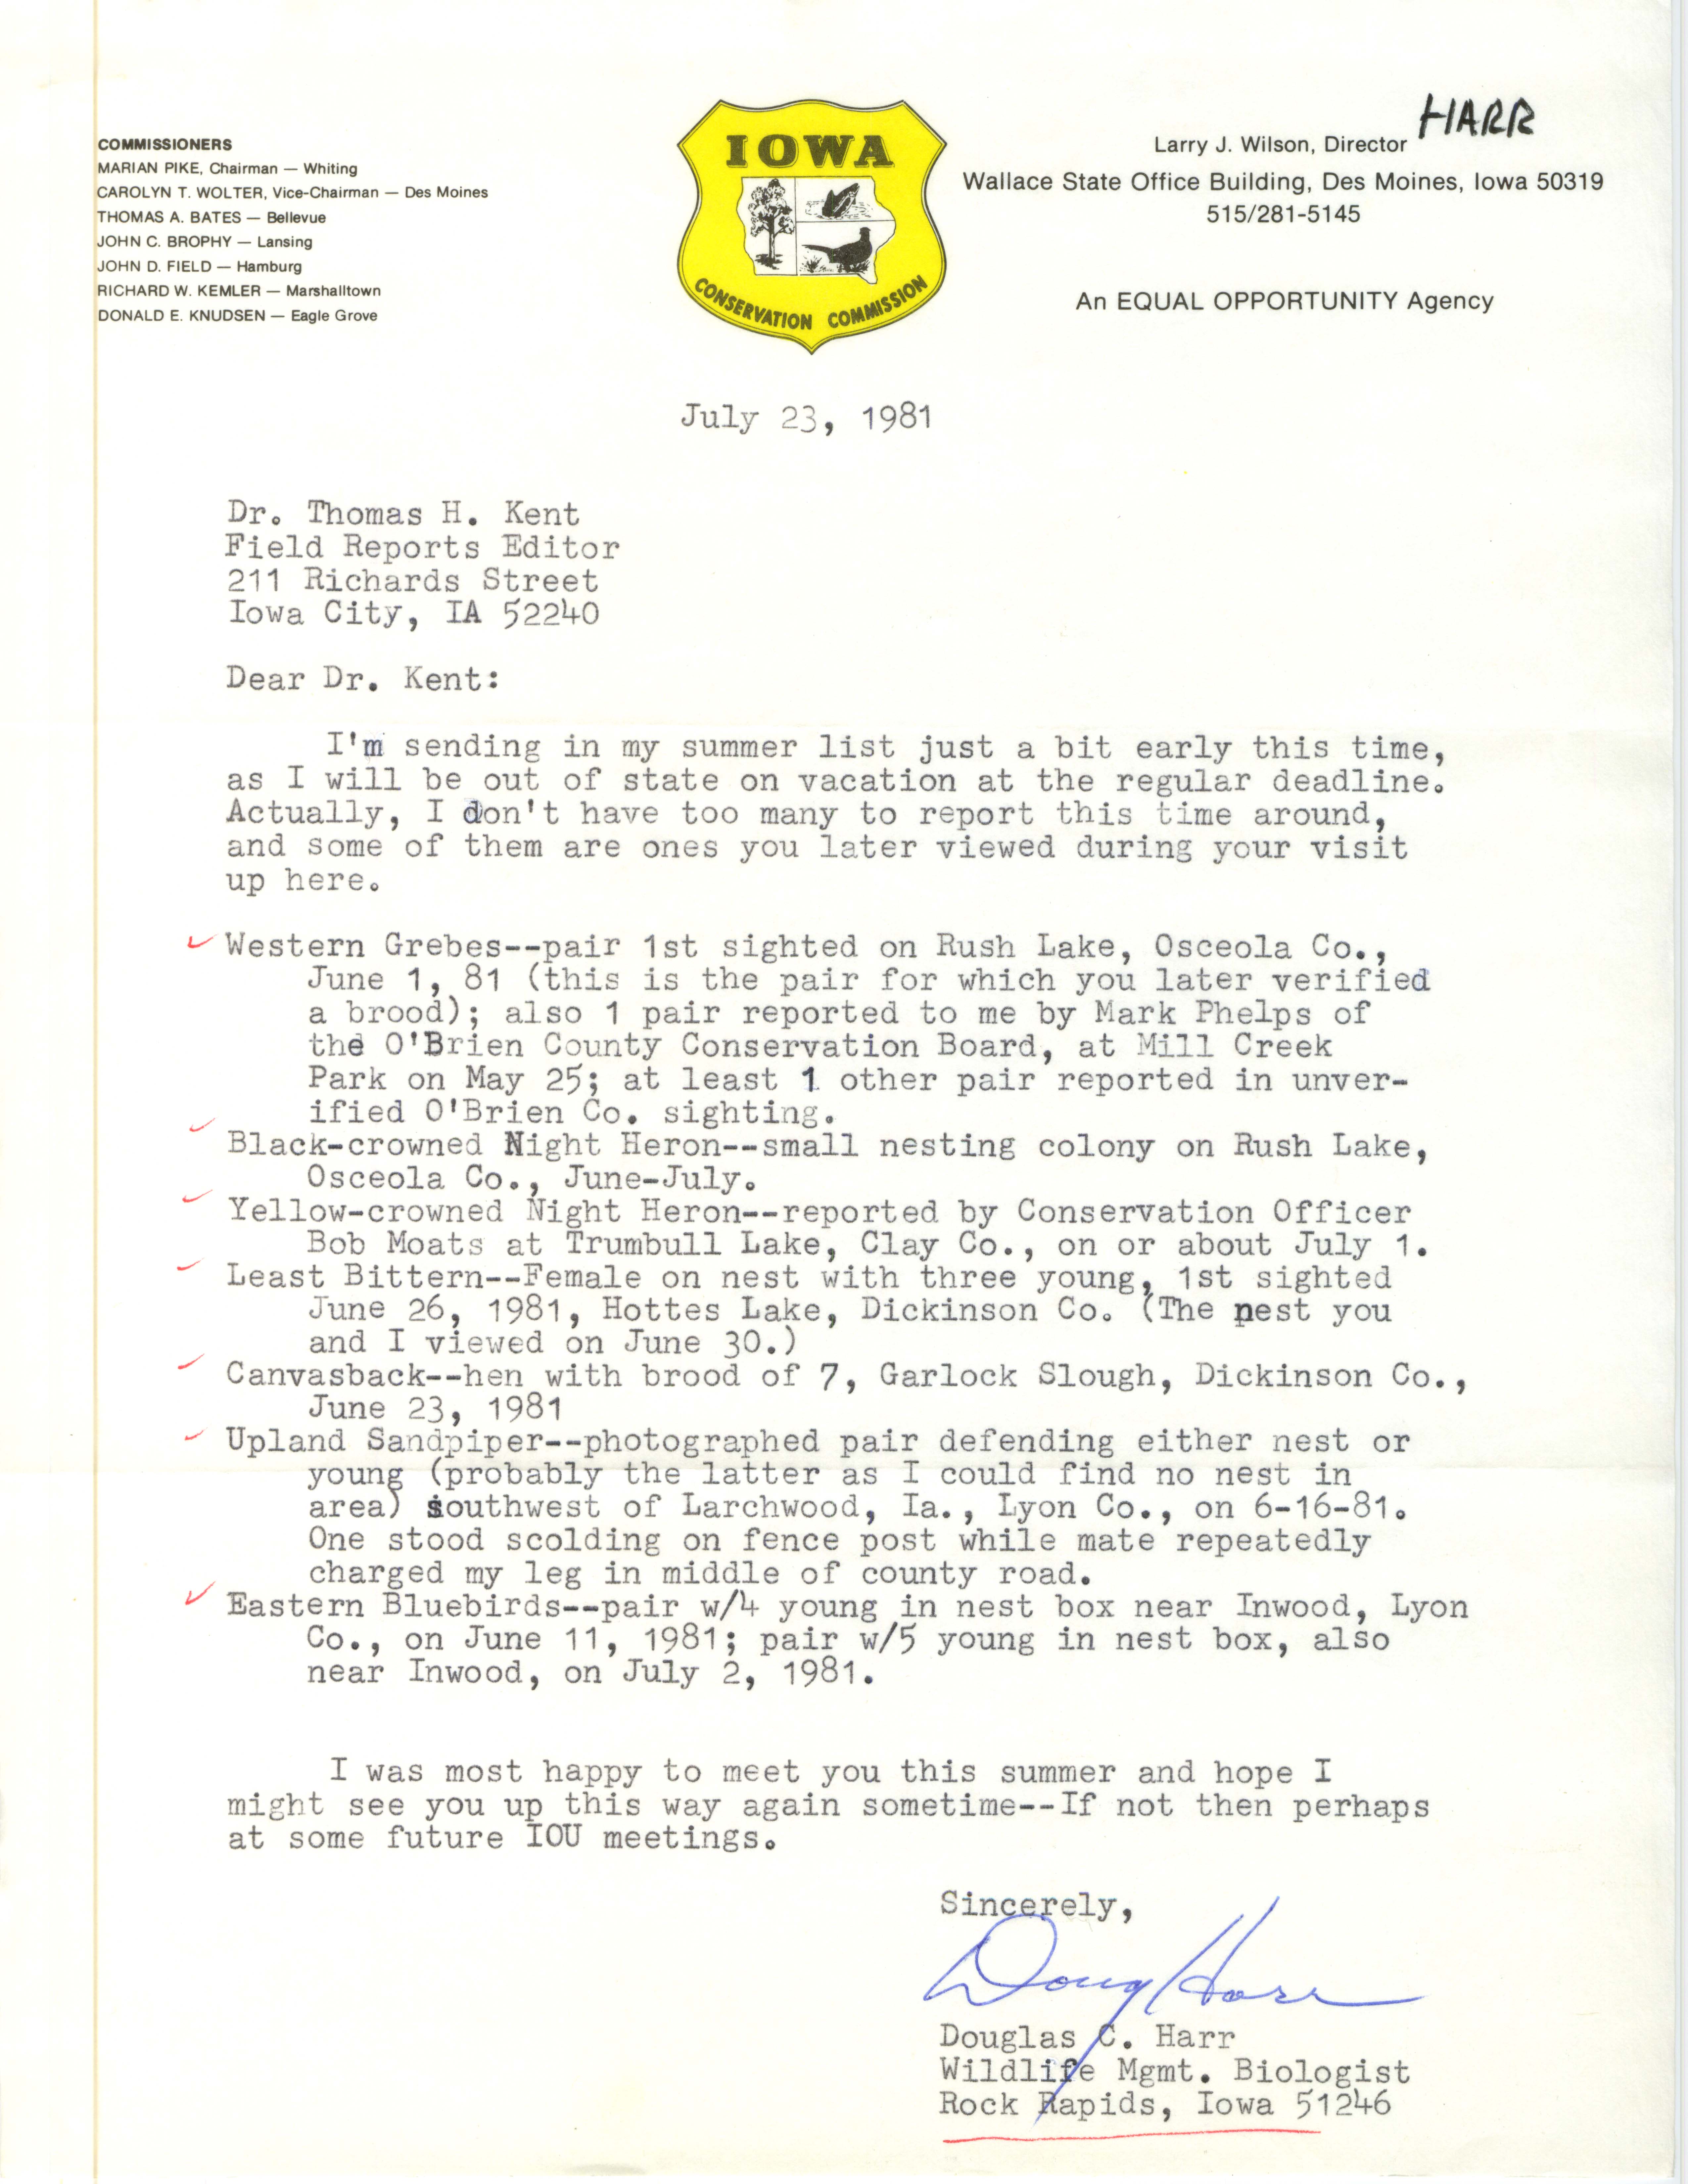 Douglas C. Harr letter to Thomas H. Kent regarding summer bird sightings, July 23, 1981